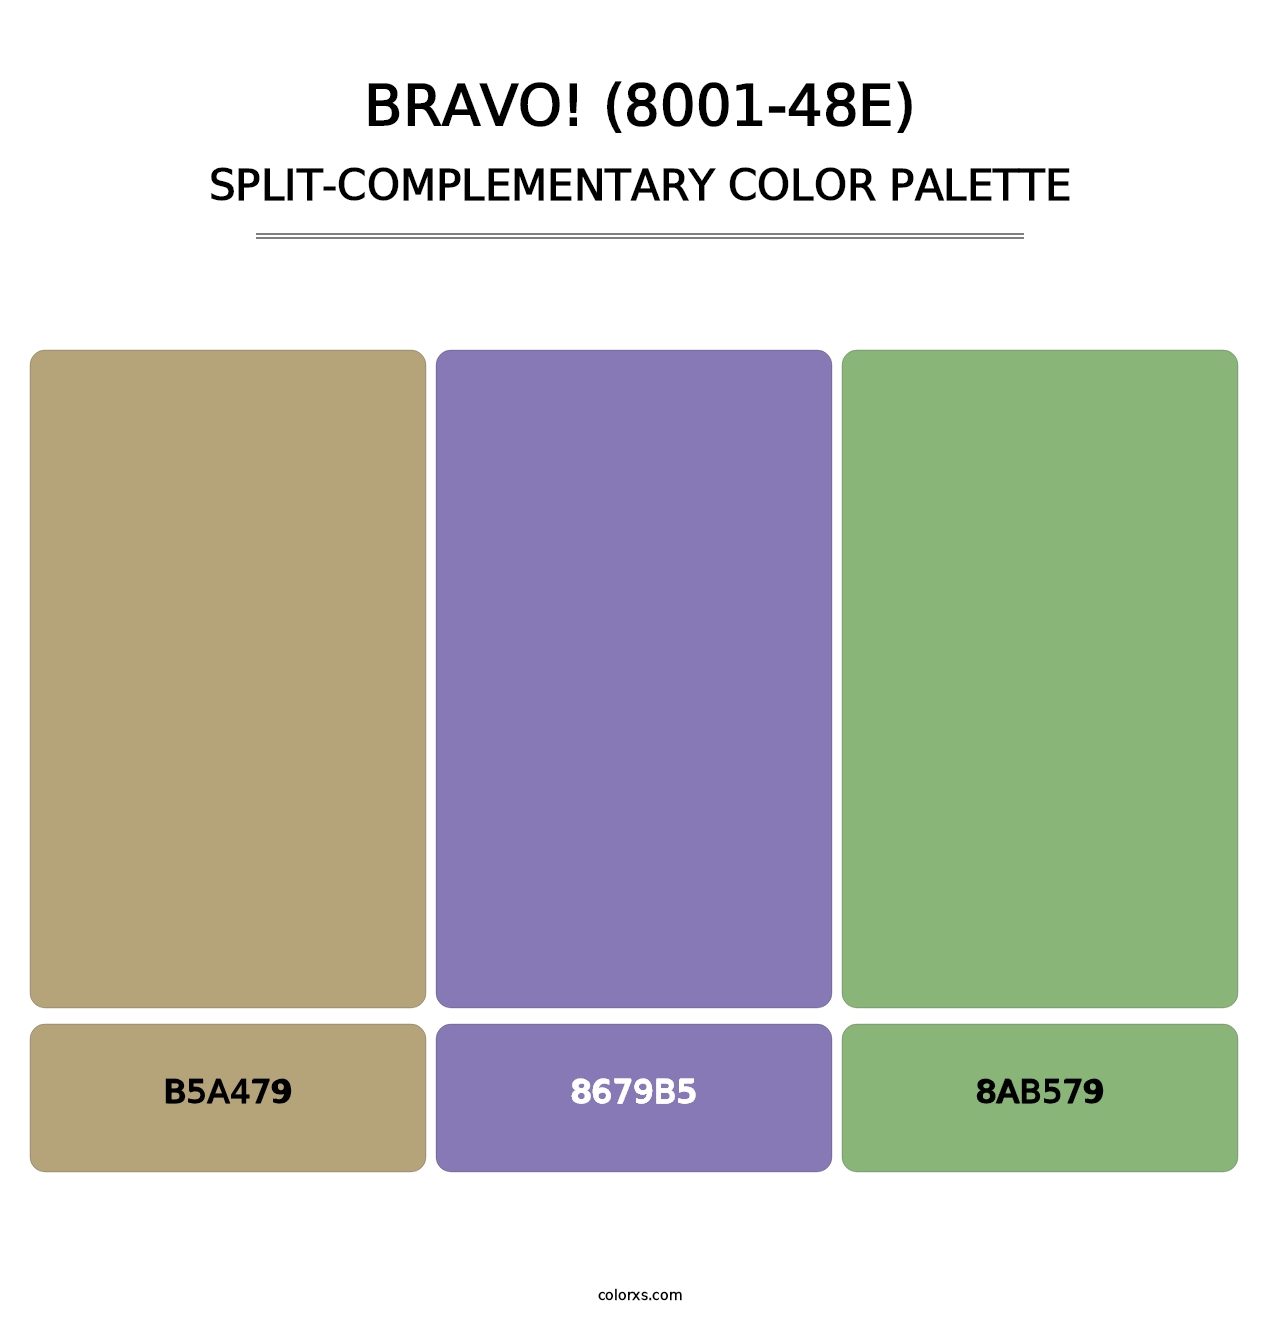 Bravo! (8001-48E) - Split-Complementary Color Palette